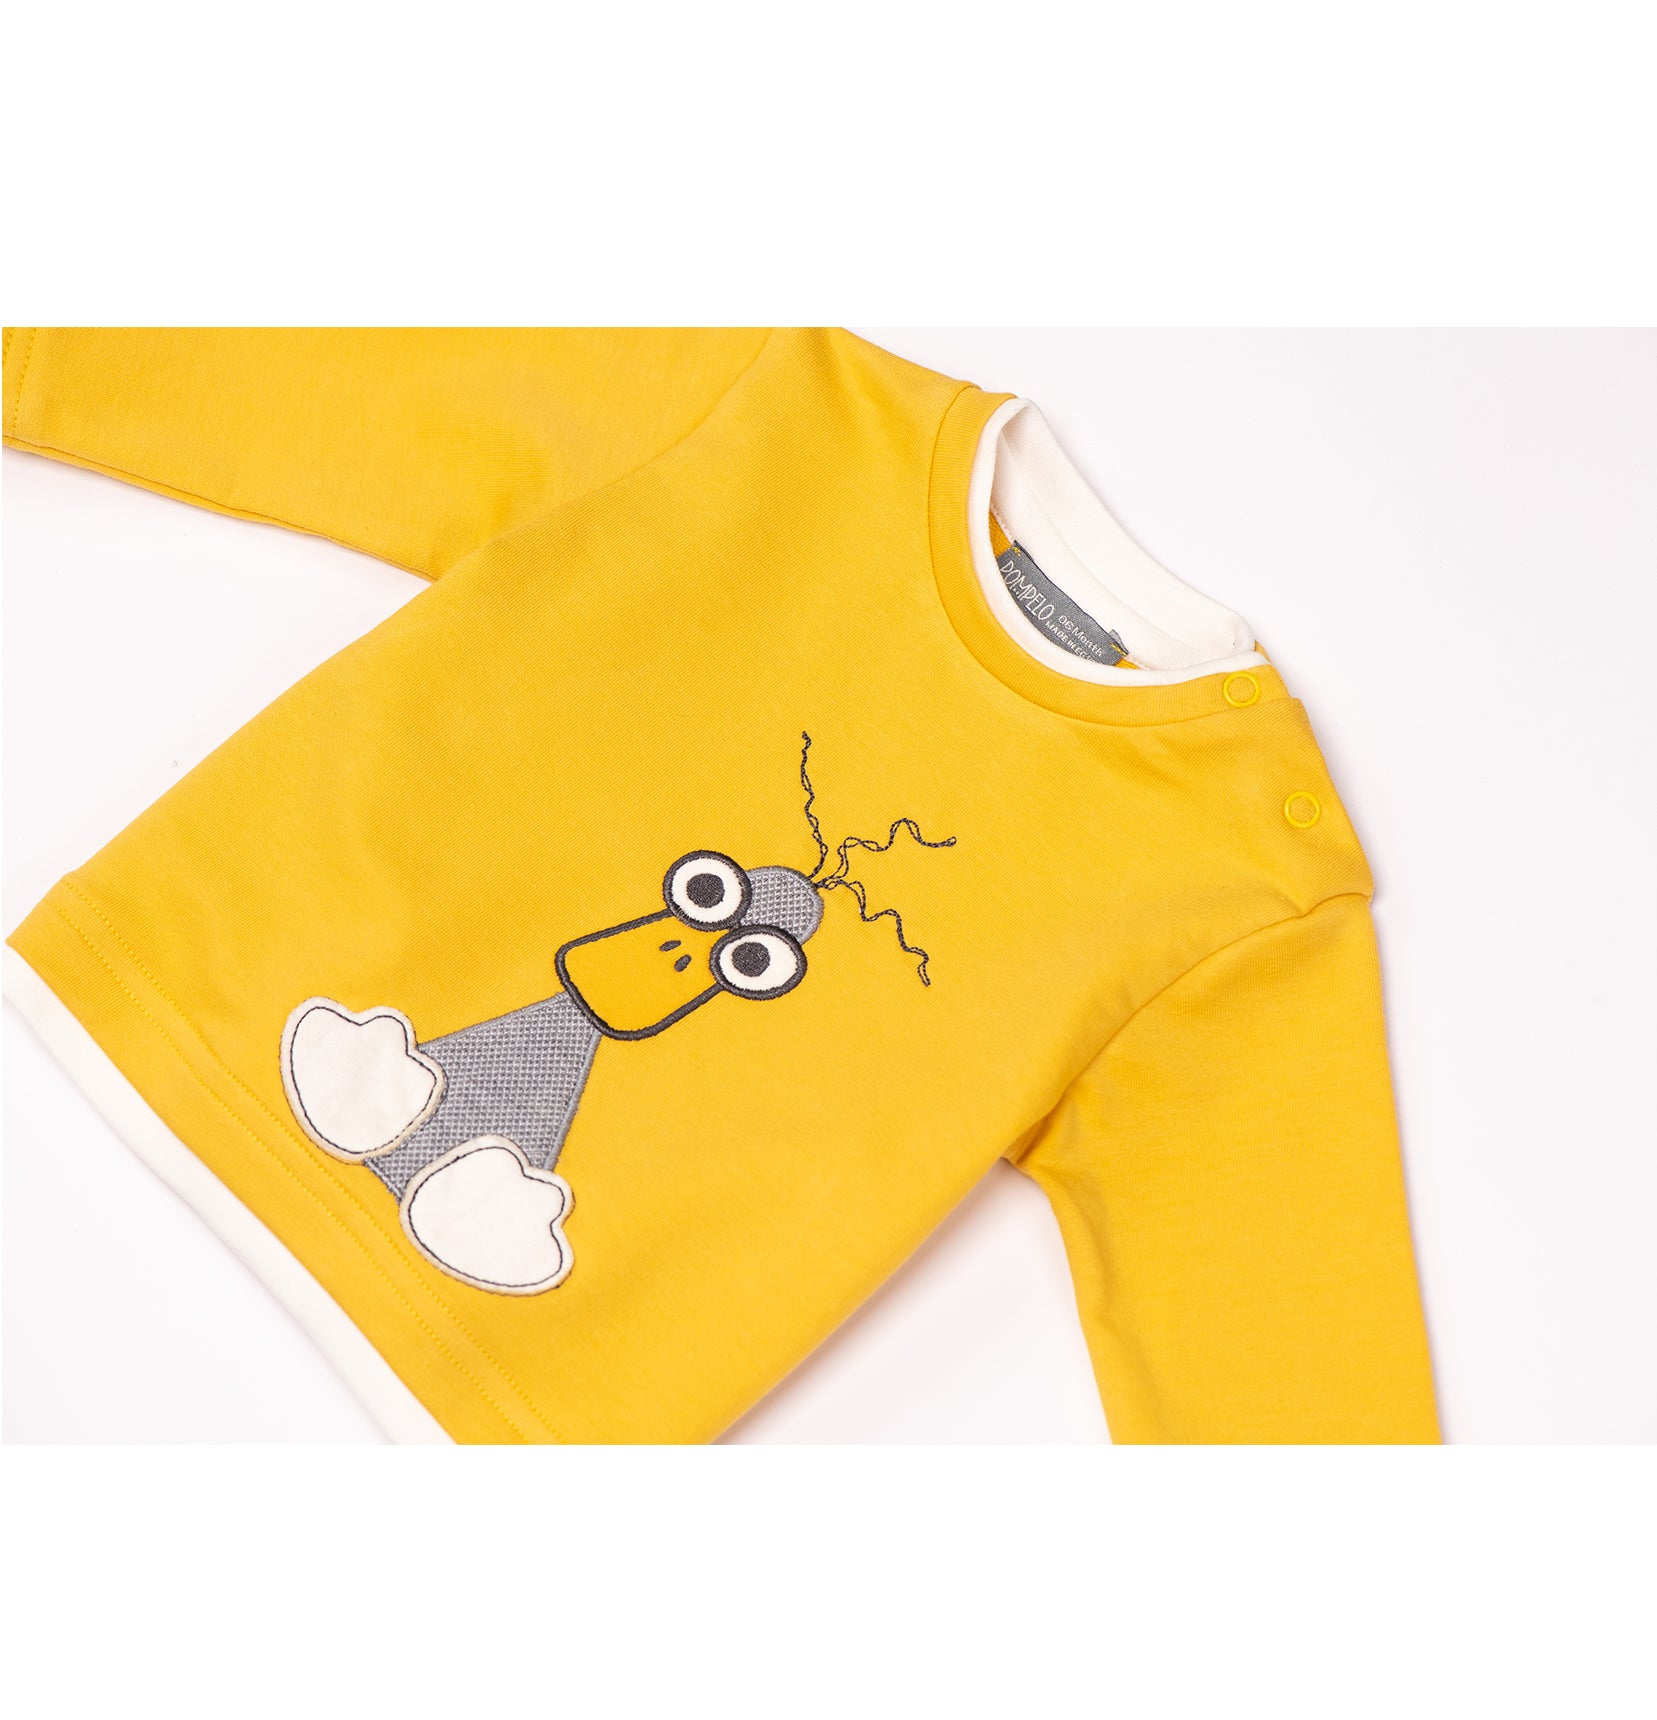 Cute long sleeve yellow Babyboy sweatshirt by Pompelo